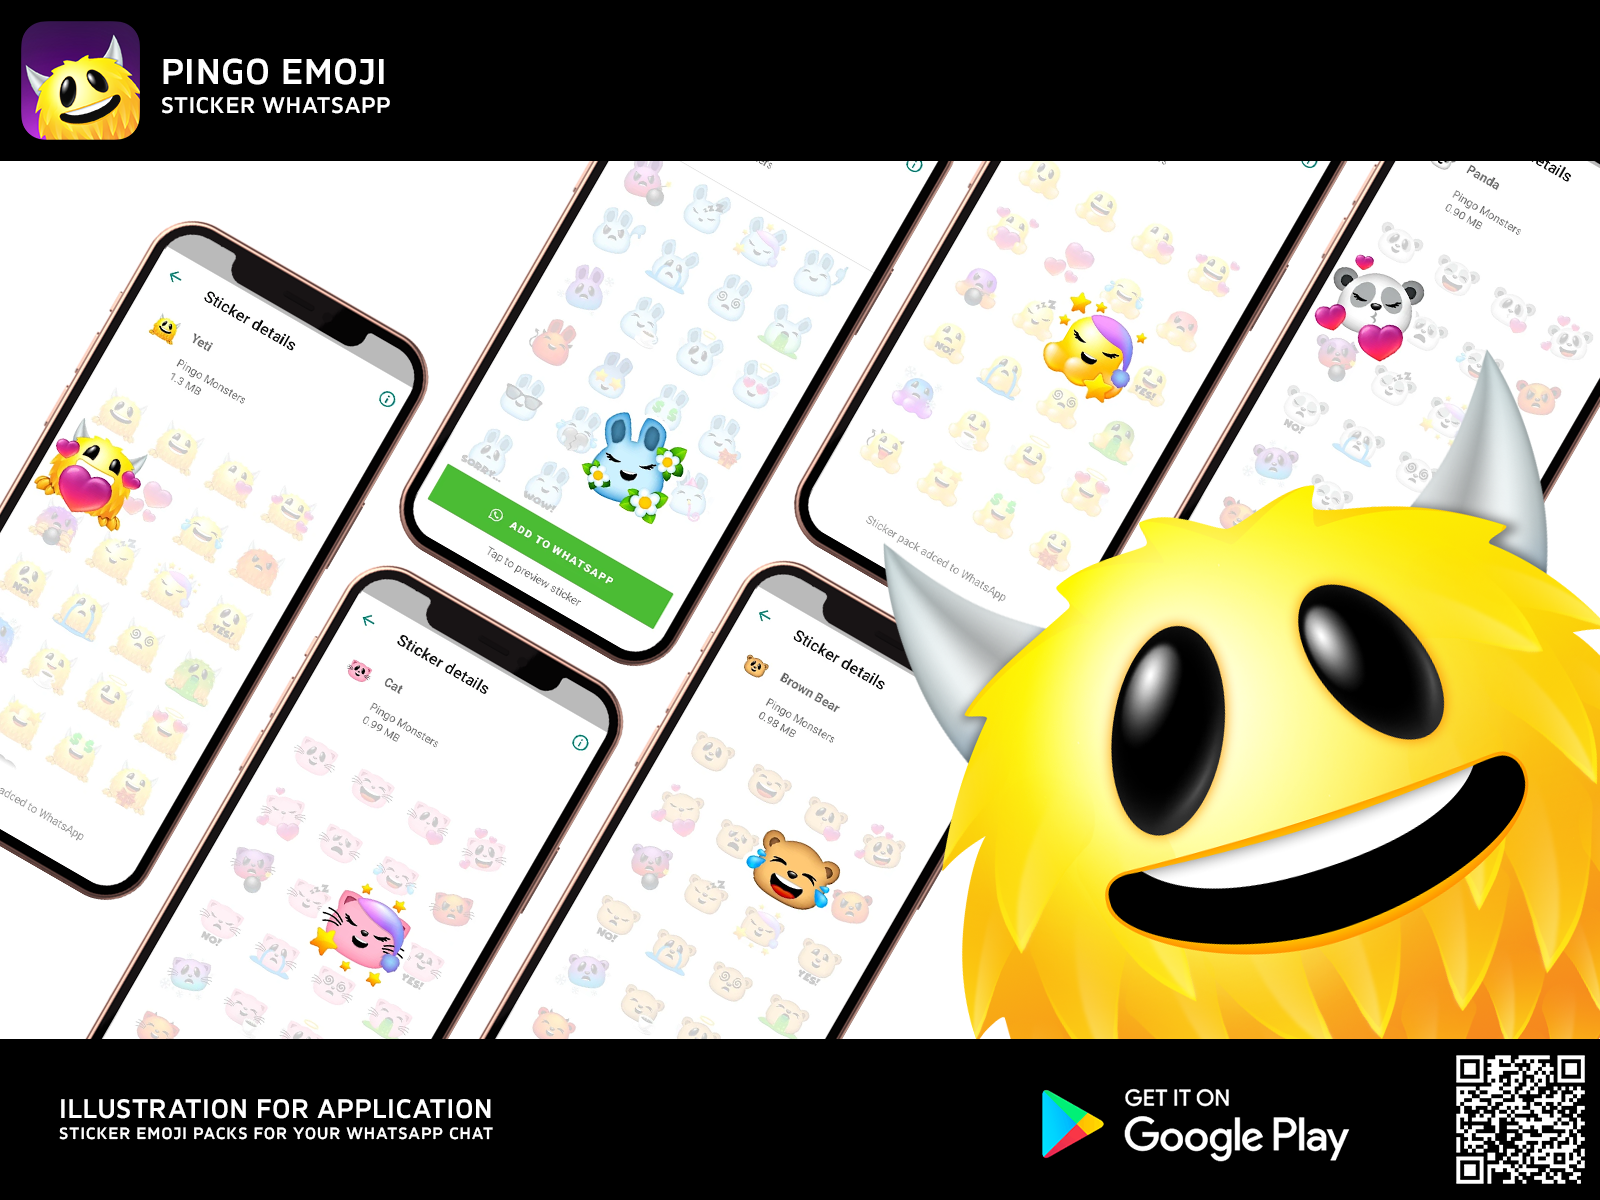 Pingo Emoji Stickers For Whatsapp By Kristína Debnár On Dribbble